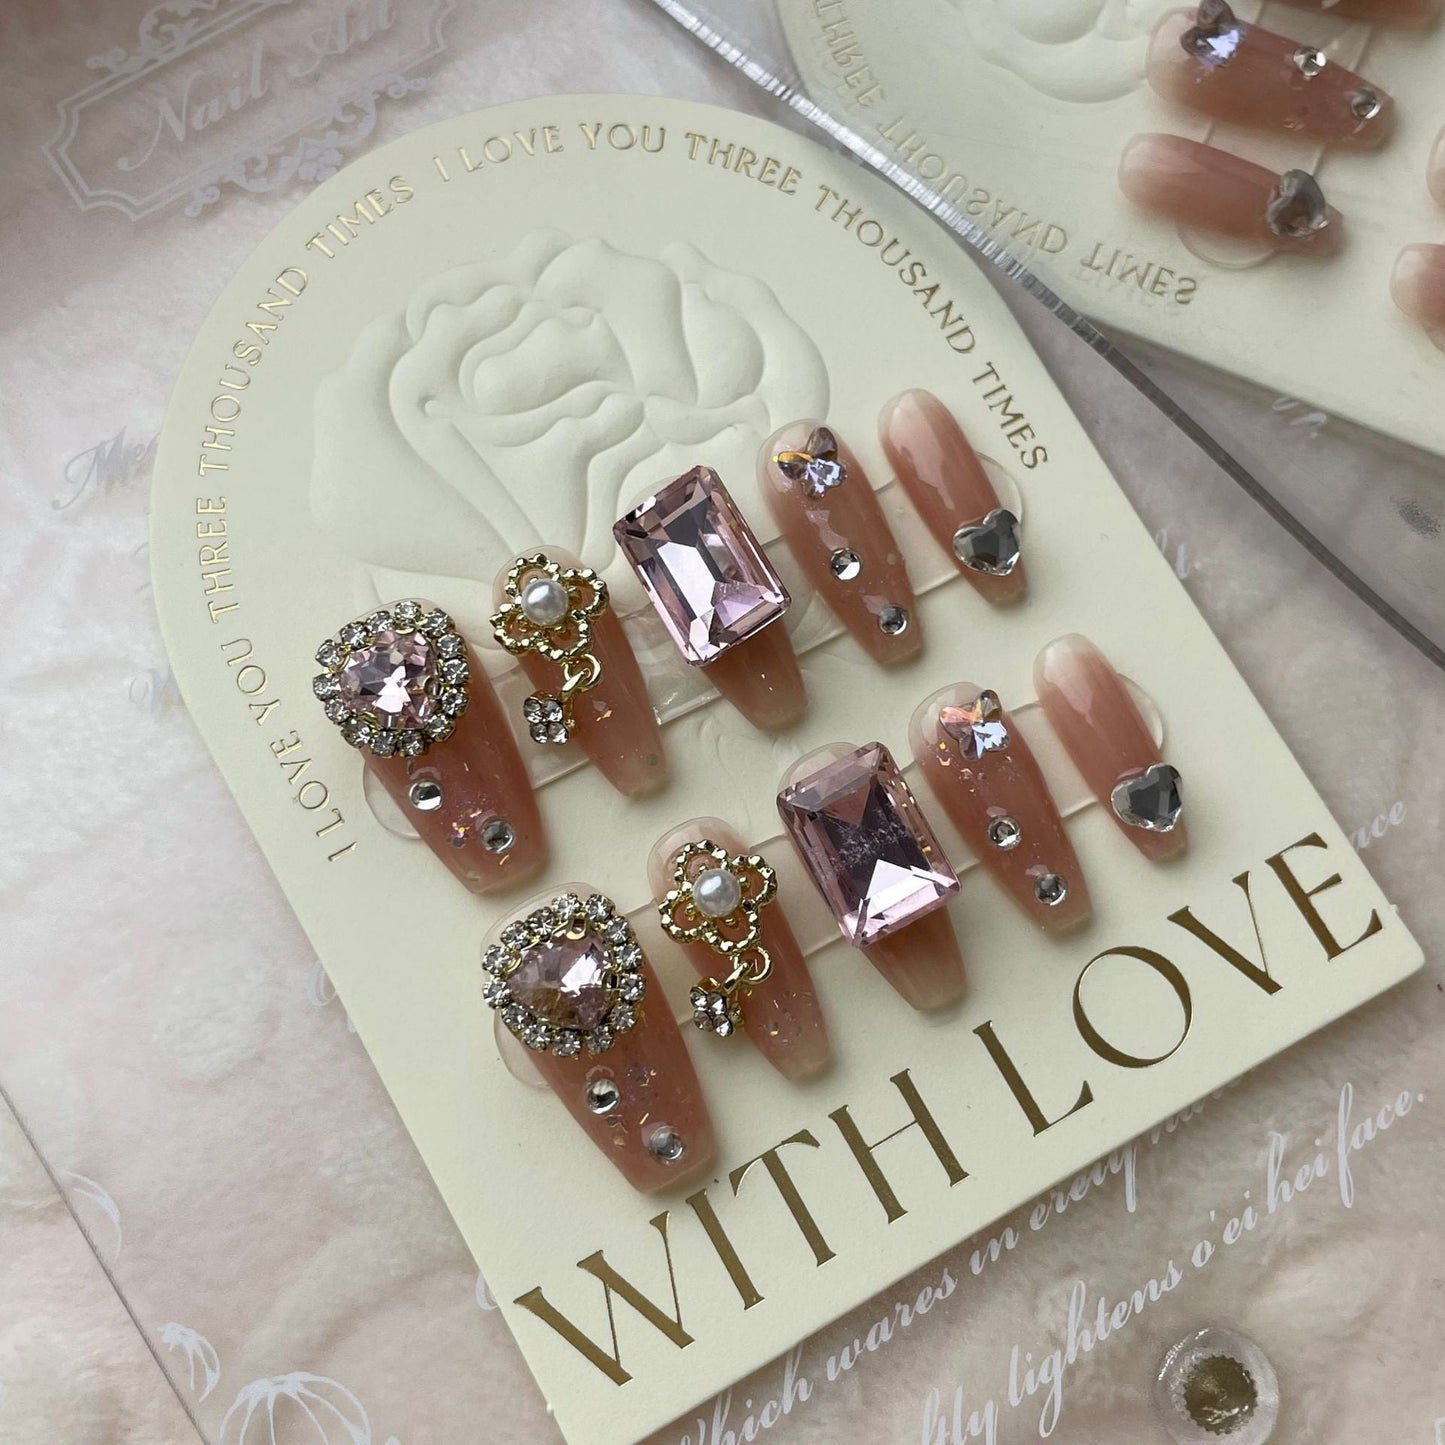 615/630 Rhinestone press on nails 100% handmade false nails pink nude color